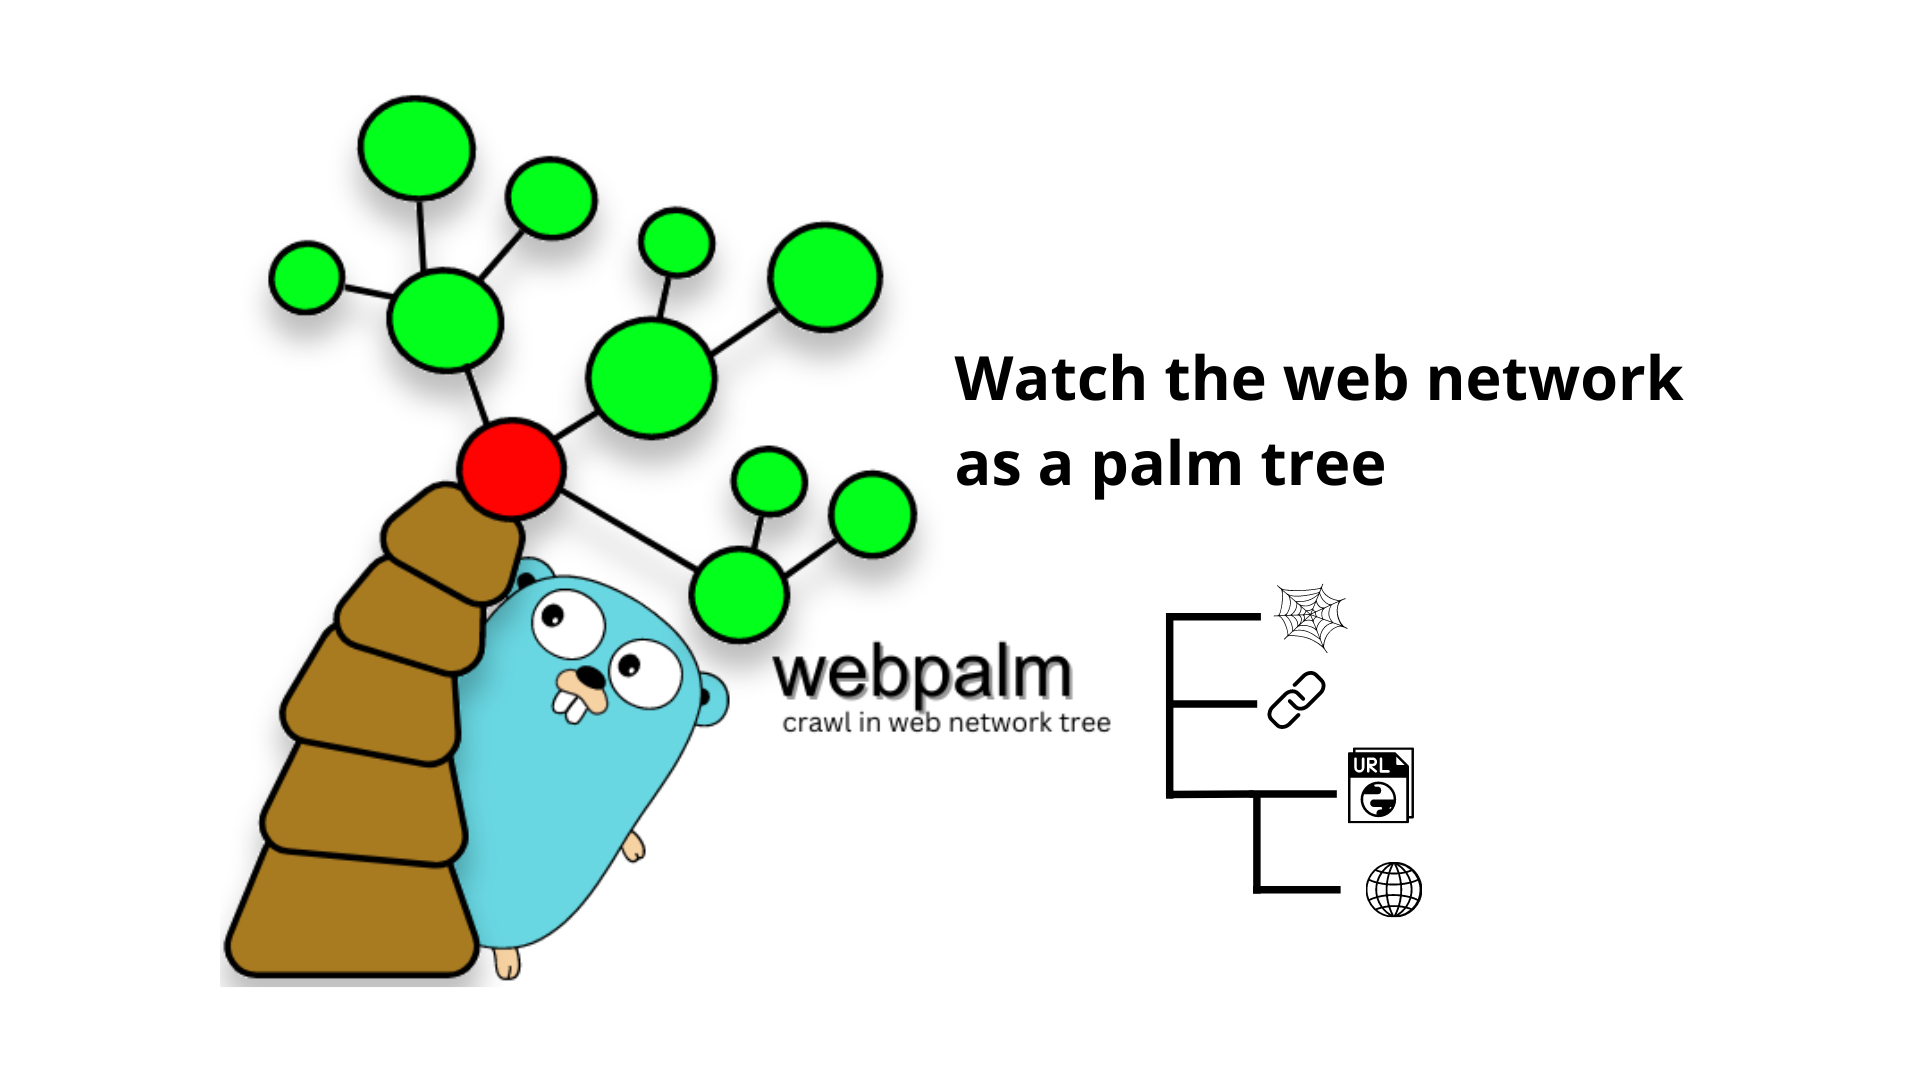 webpalm